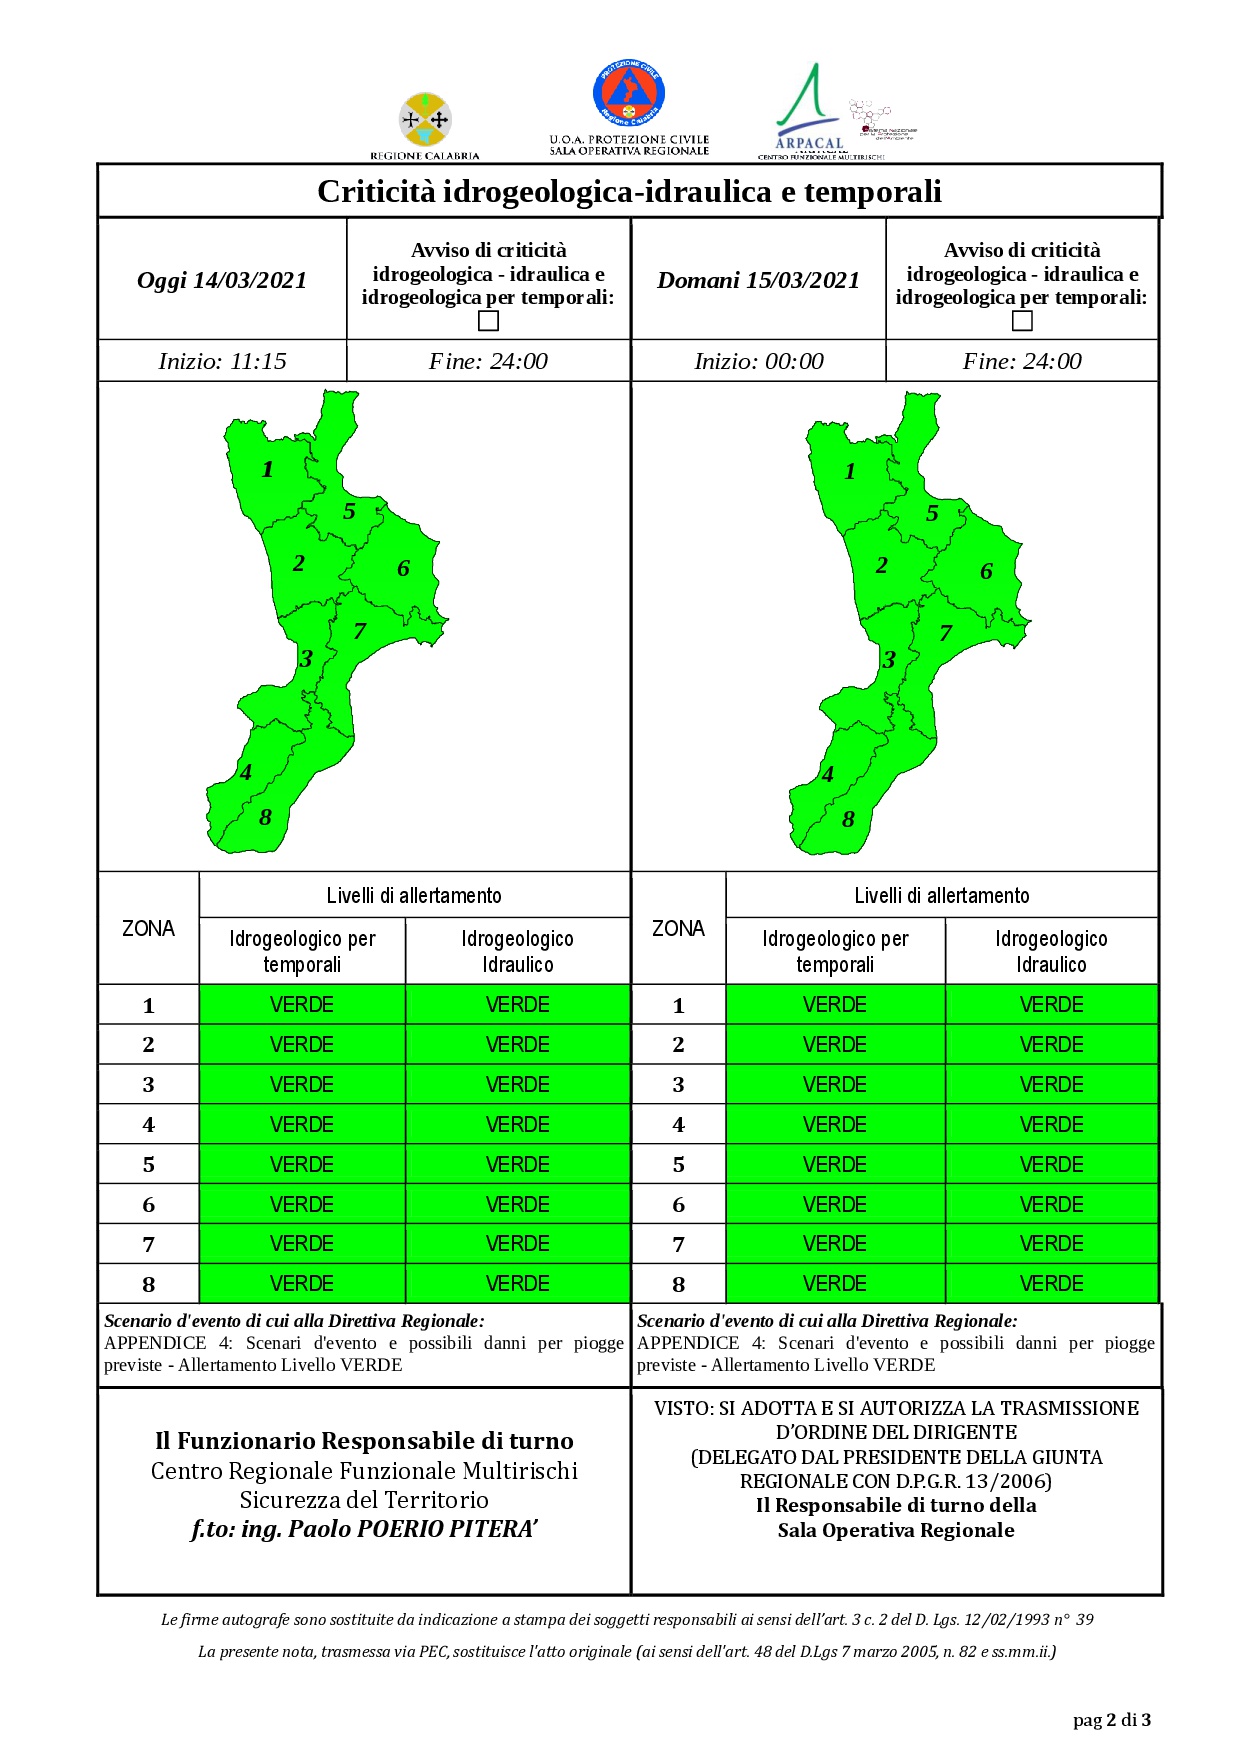 Criticità idrogeologica-idraulica e temporali in Calabria 14-03-2021